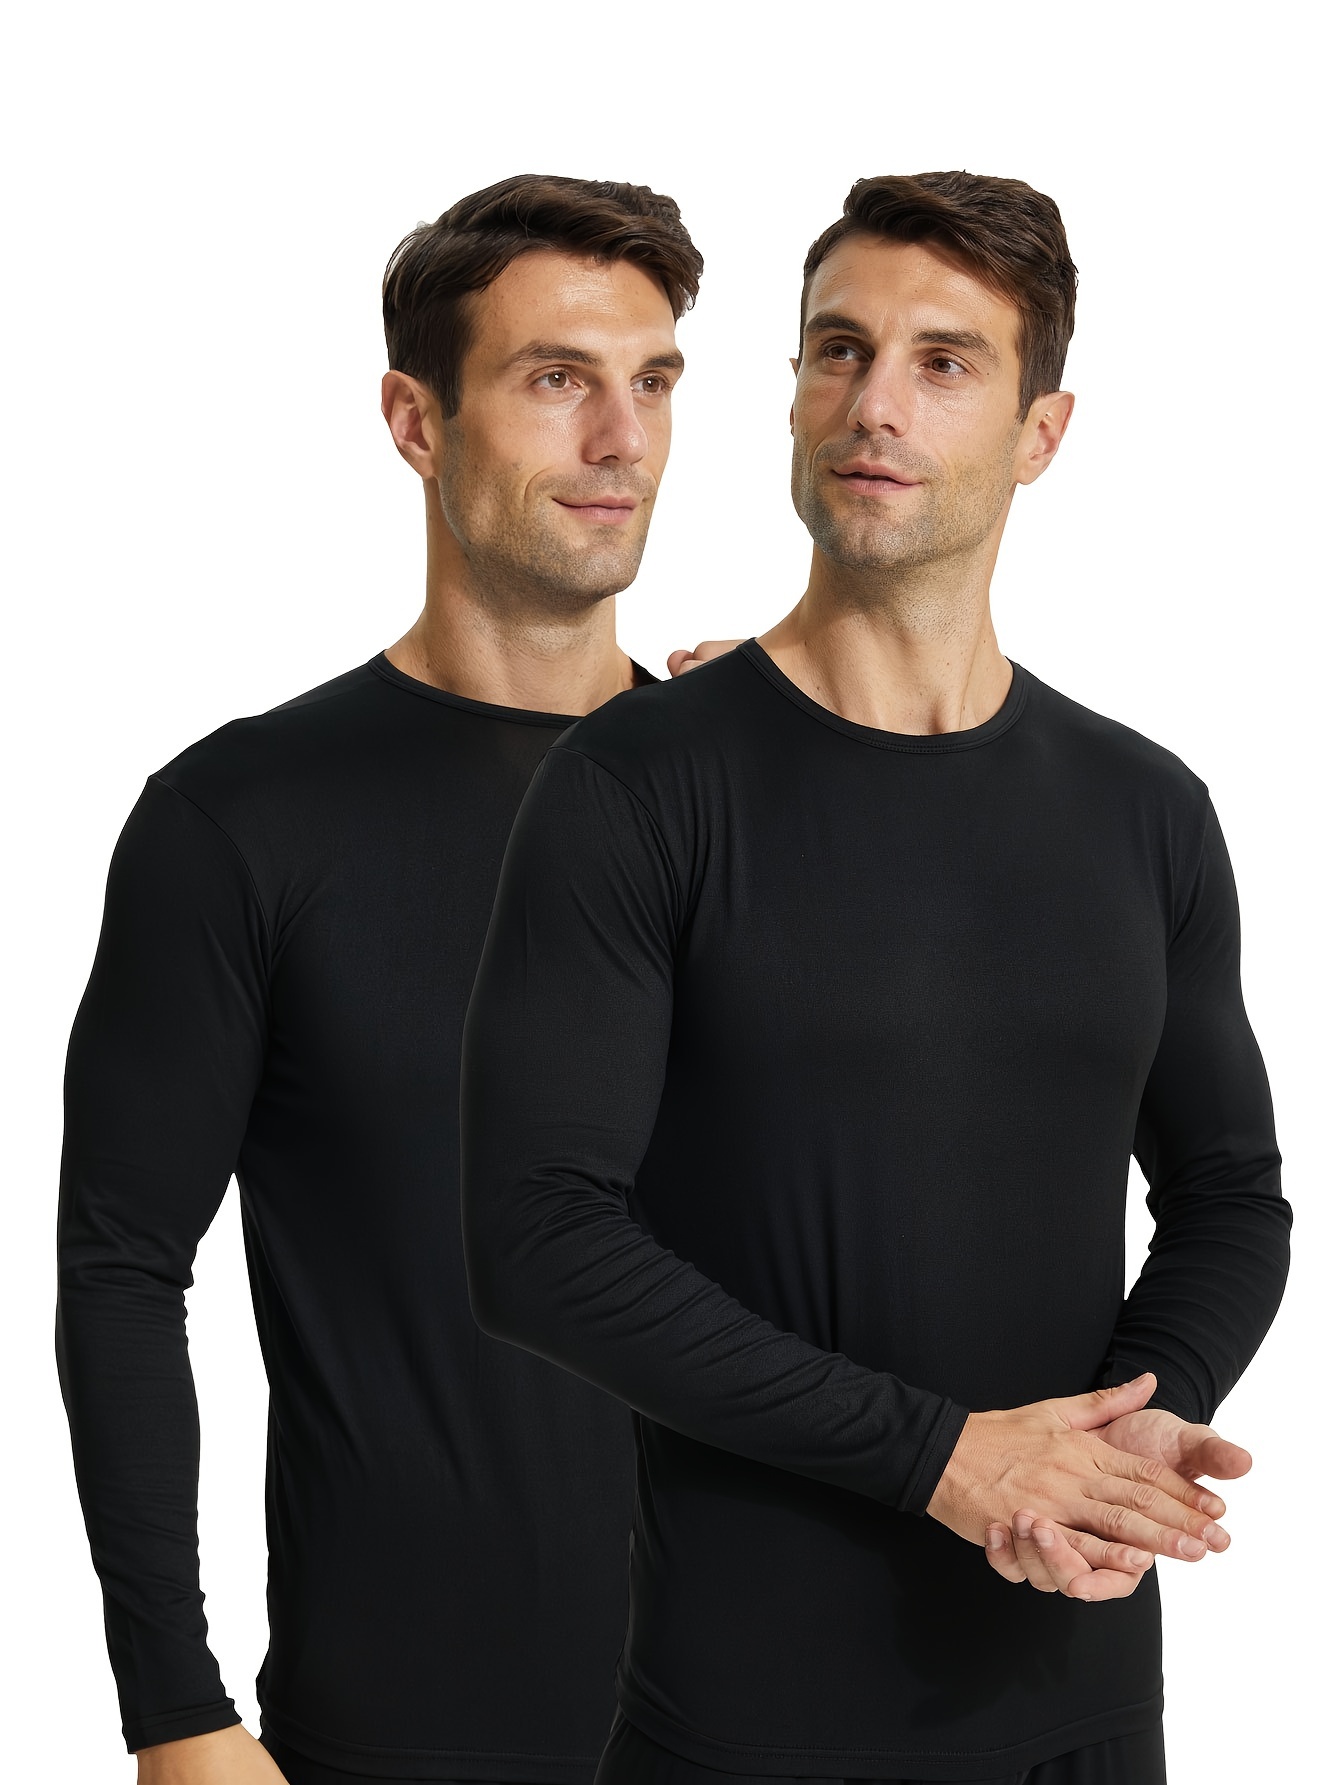 Winter Thermal Tops for Boys Fleece Lined Underwear Tee Unisex Long Sleeve  Undershirts Baselayer